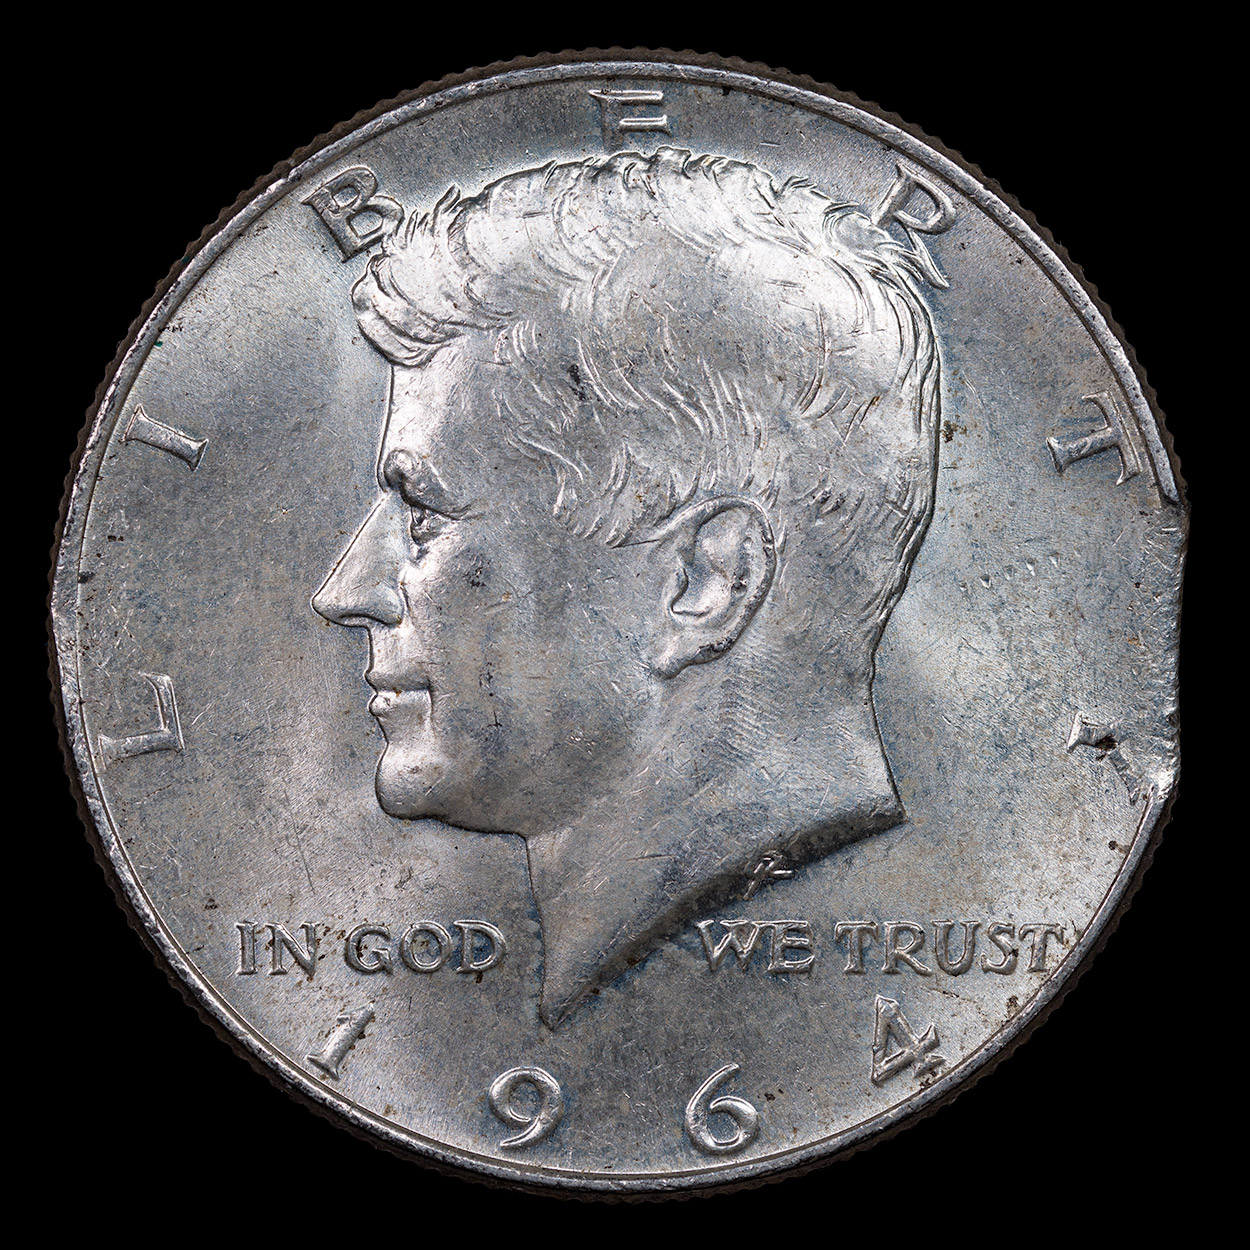 1964-Kennedy-Half-Dollar-Clipped-Planchet-Obverse.jpg